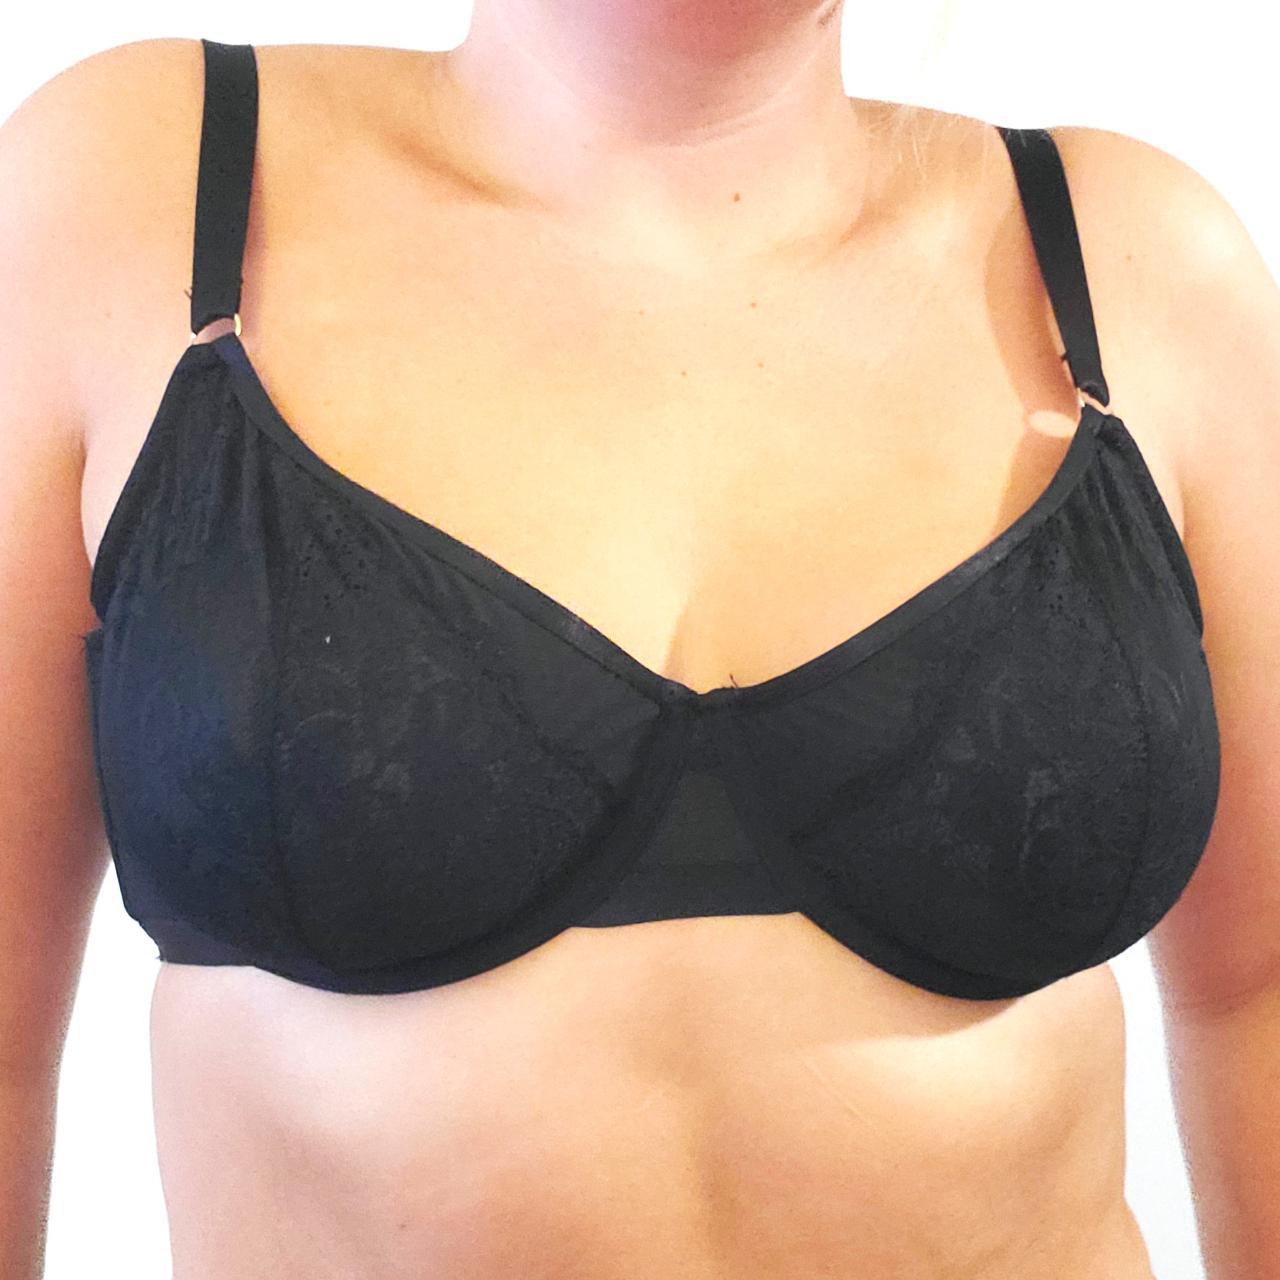 Product Image 2 - Beautiful black unlined lace bra